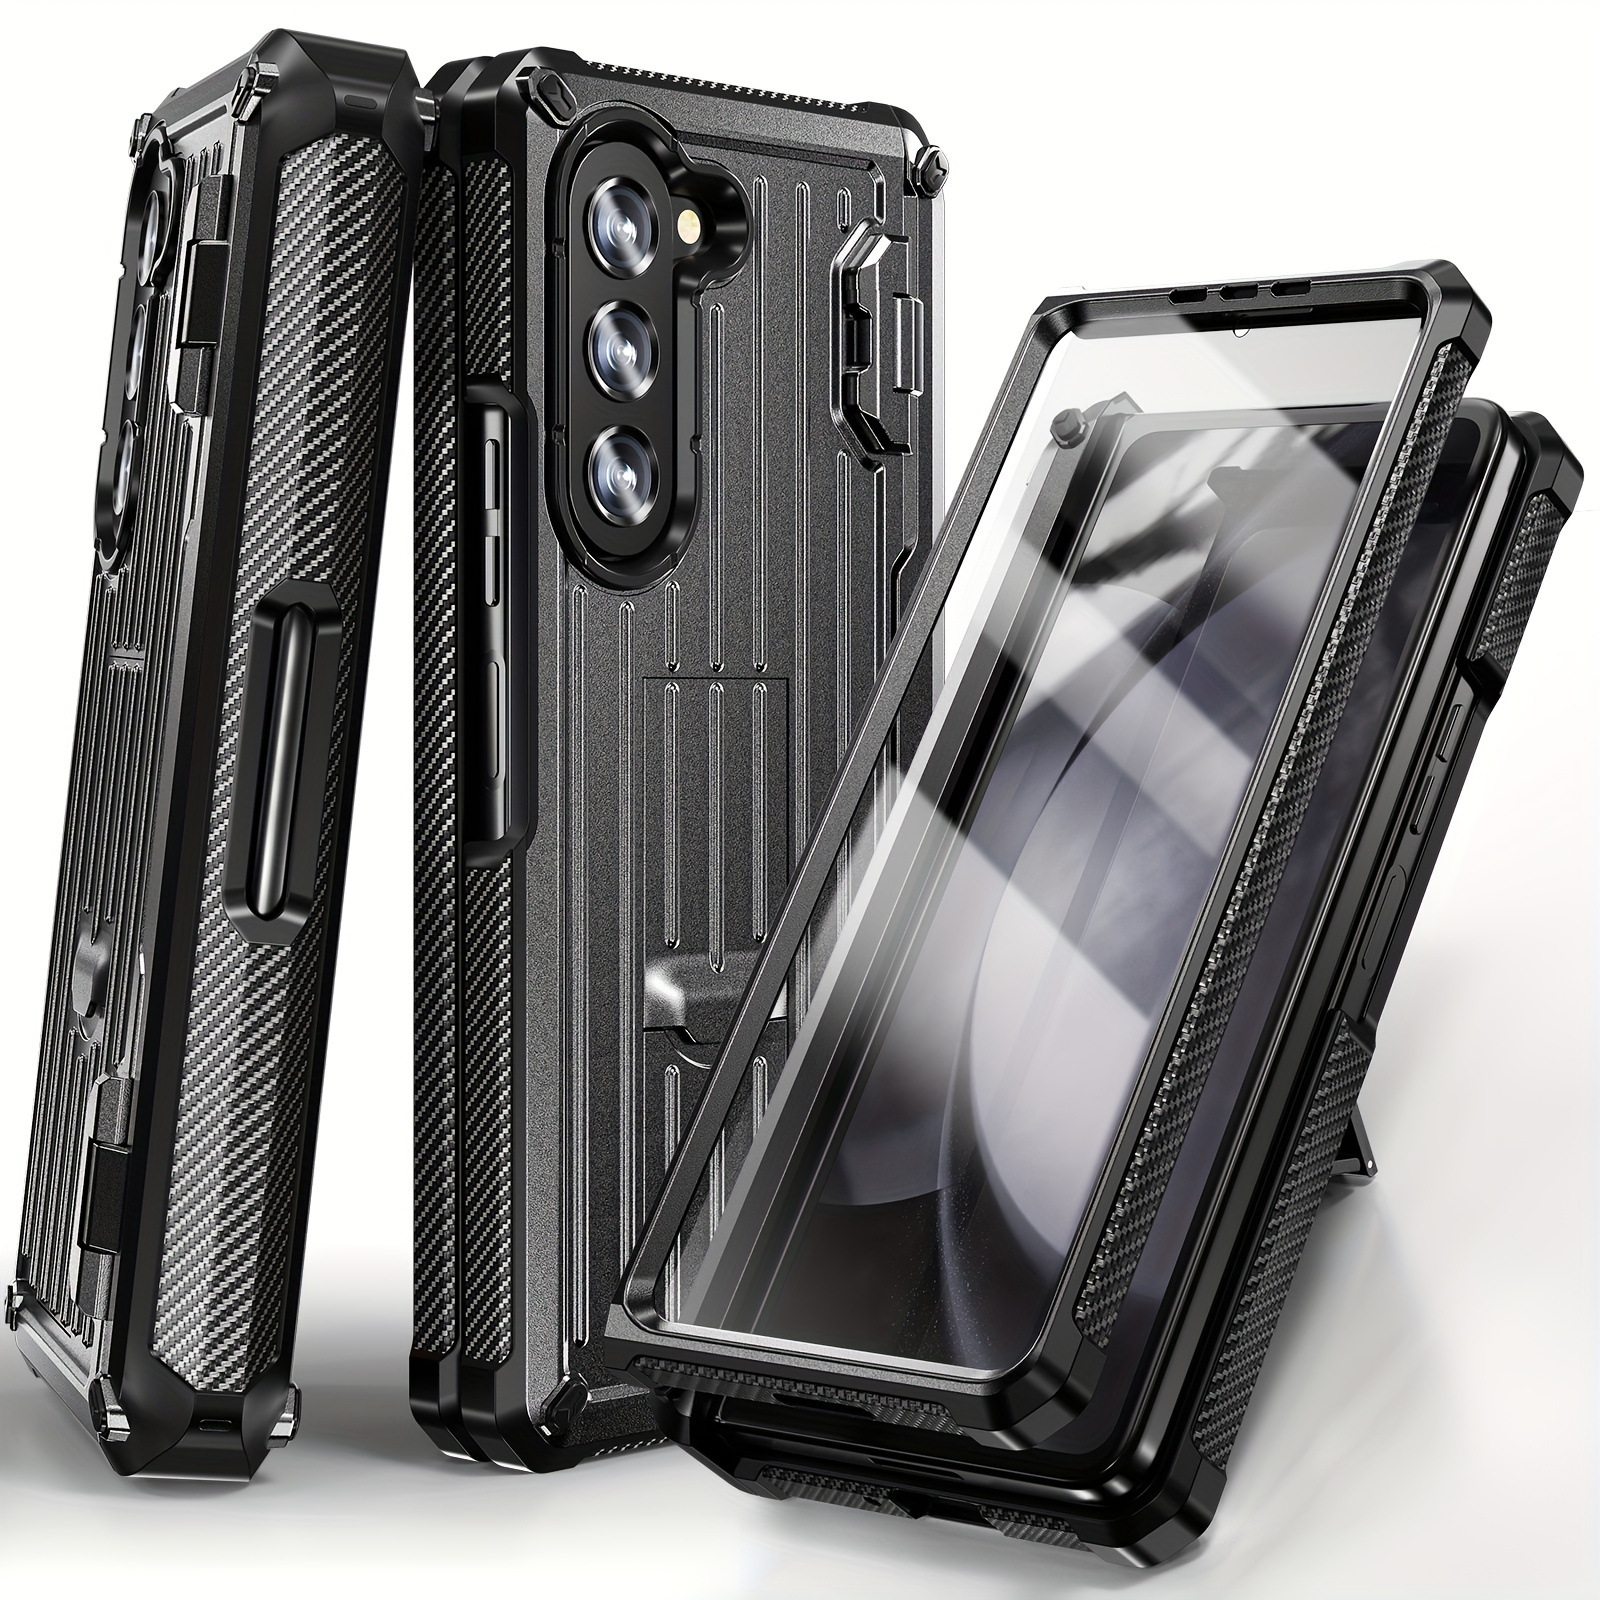 Case for SPC Zeus 4G Pro Case Compatible with SPC Zeus 4G Pro Phone Case PC  backplane + Silicone Soft Frame Cover KB-LAN5